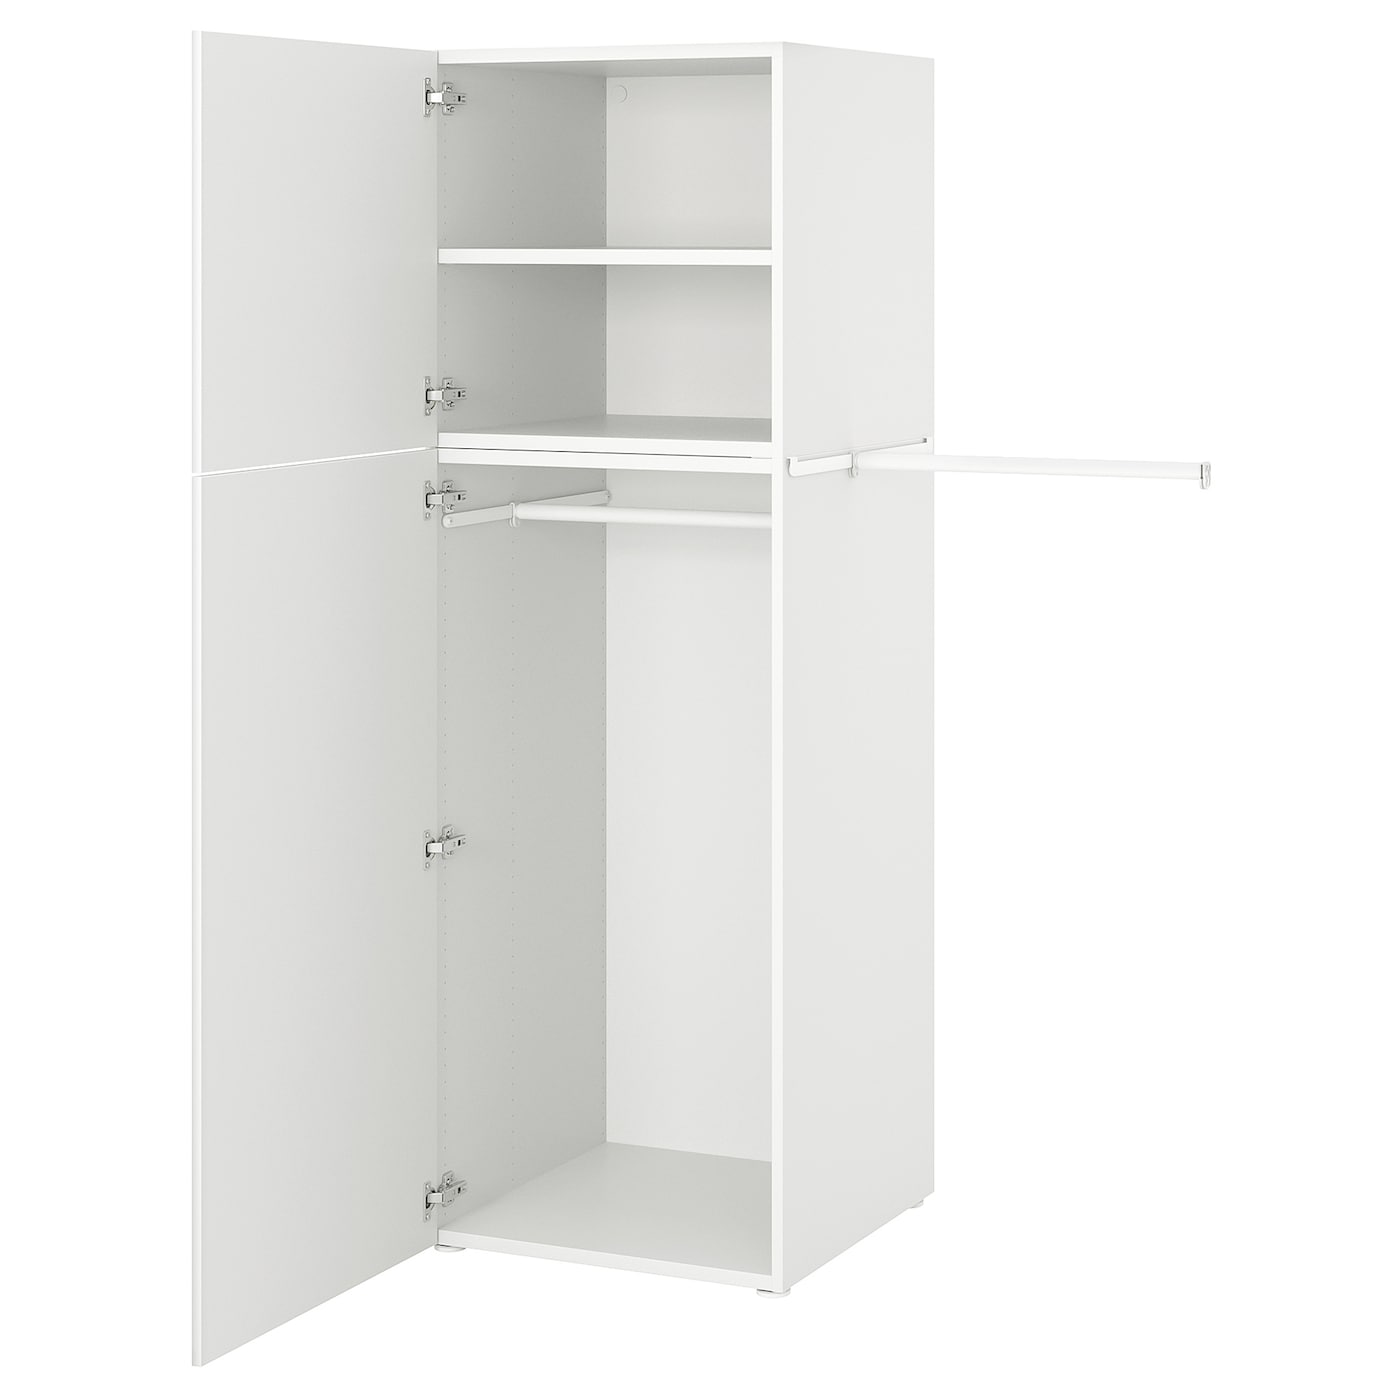 Платяной шкаф - IKEA PLATSA/FONNES  / ПЛАТСА/ФОННЕС ИКЕА, 107x57x181 см, белый